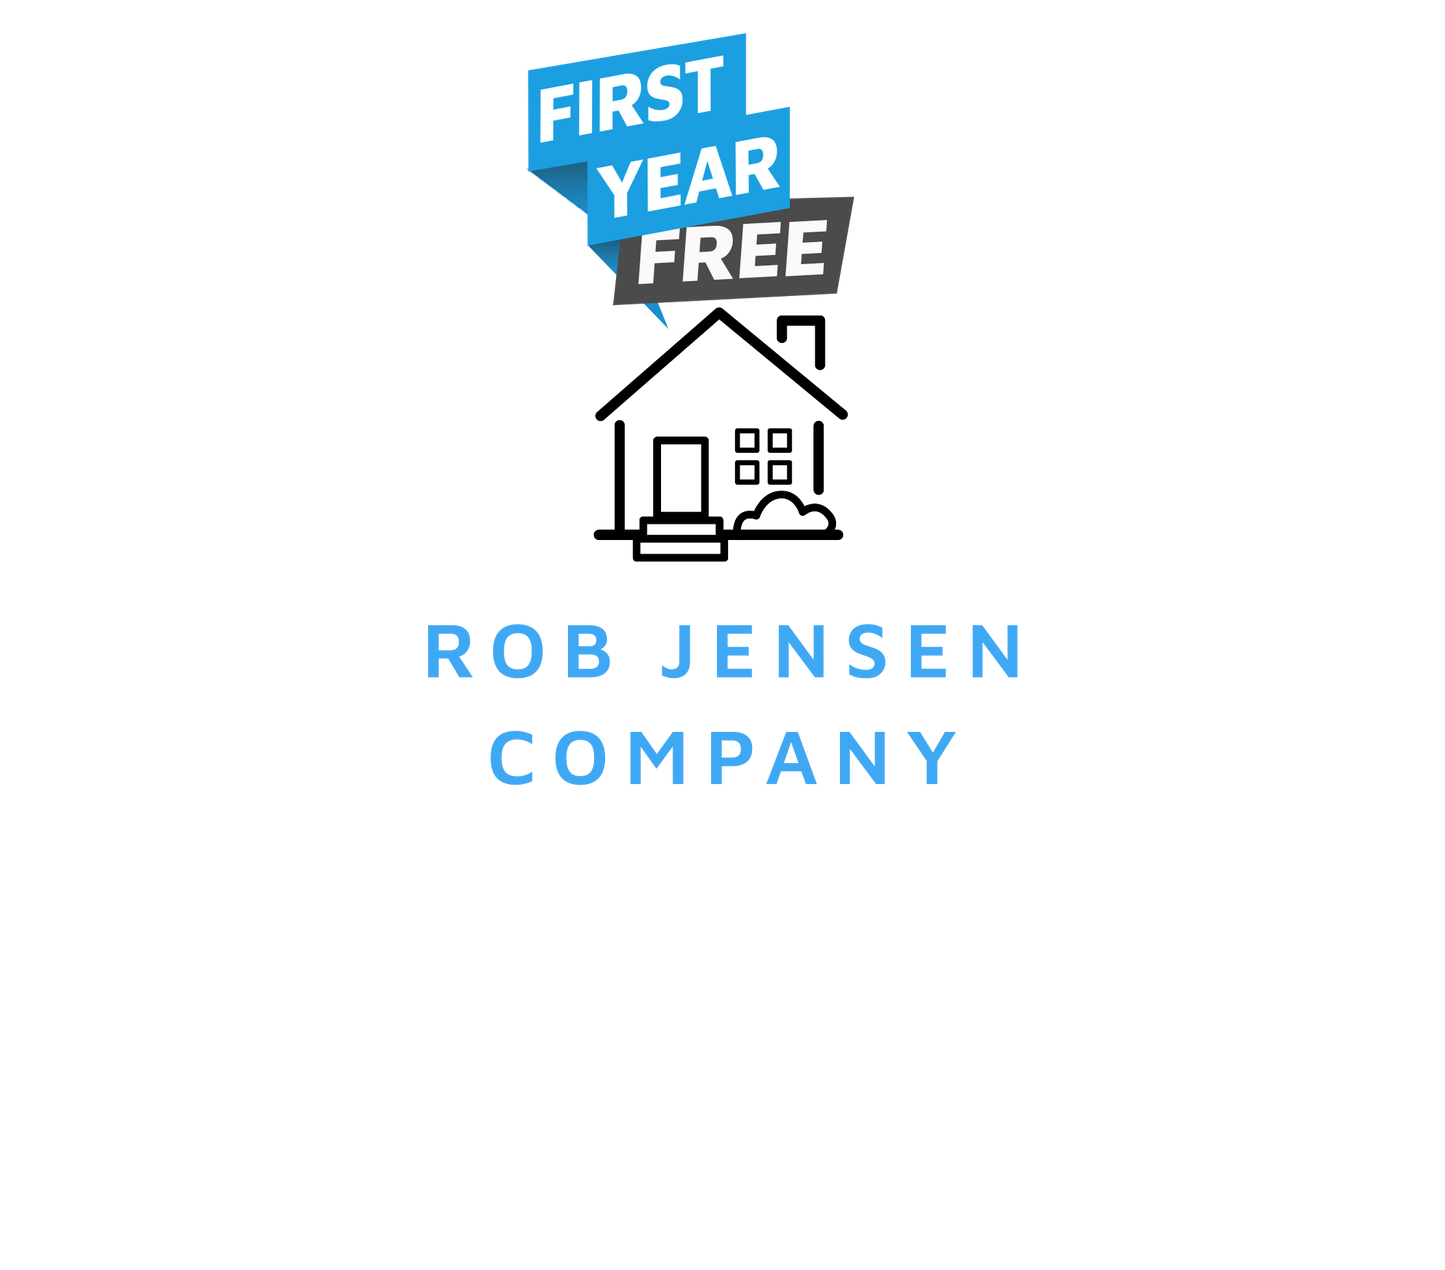 FIRST YEAR FREE - Rob Jensen Company - use code RJ29